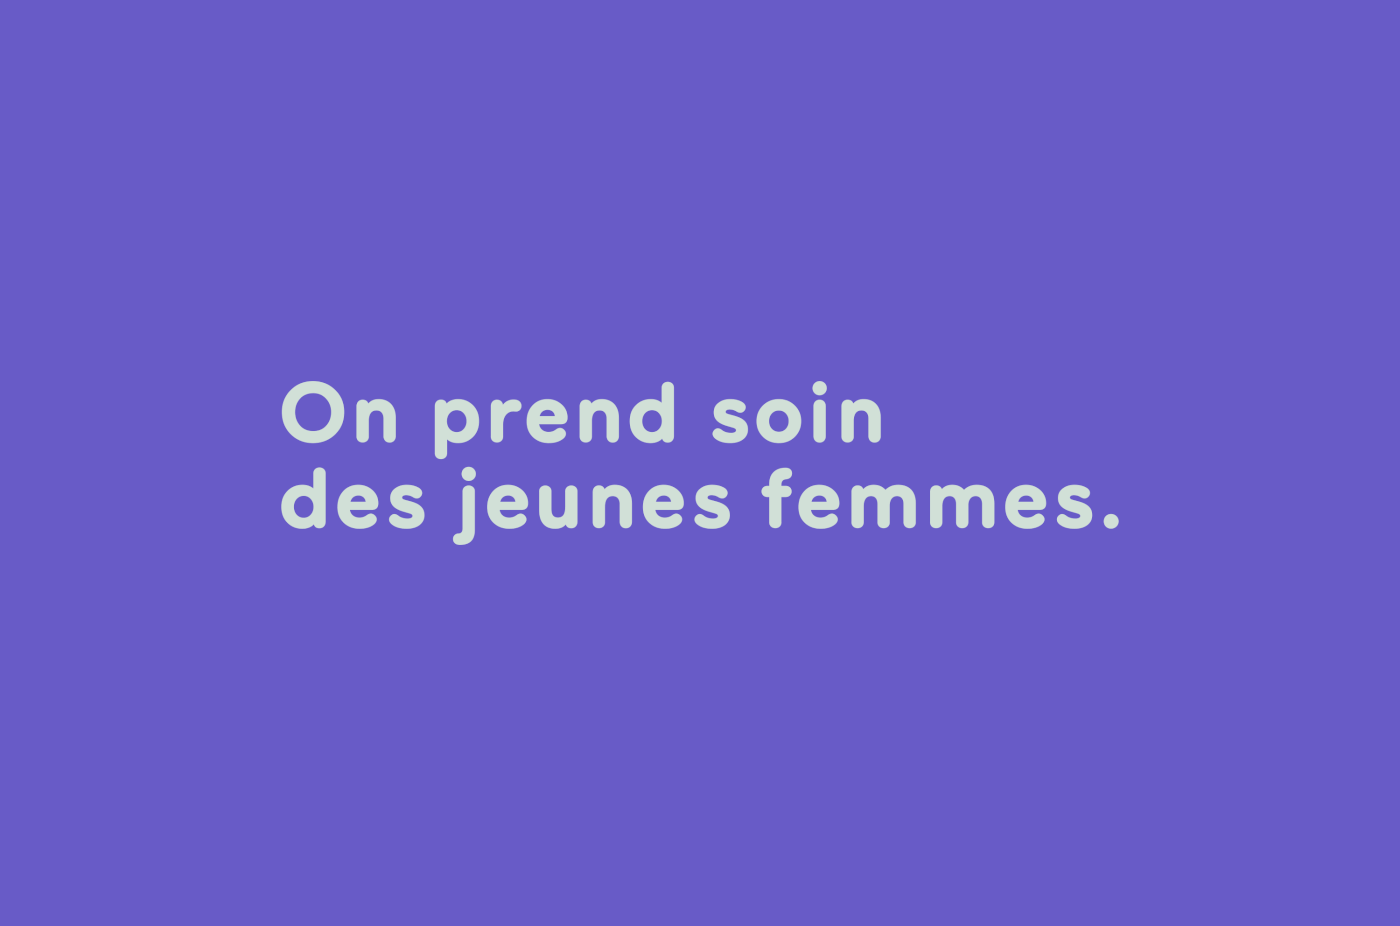 Montreal passages femme women help identity green purple OSBL logo